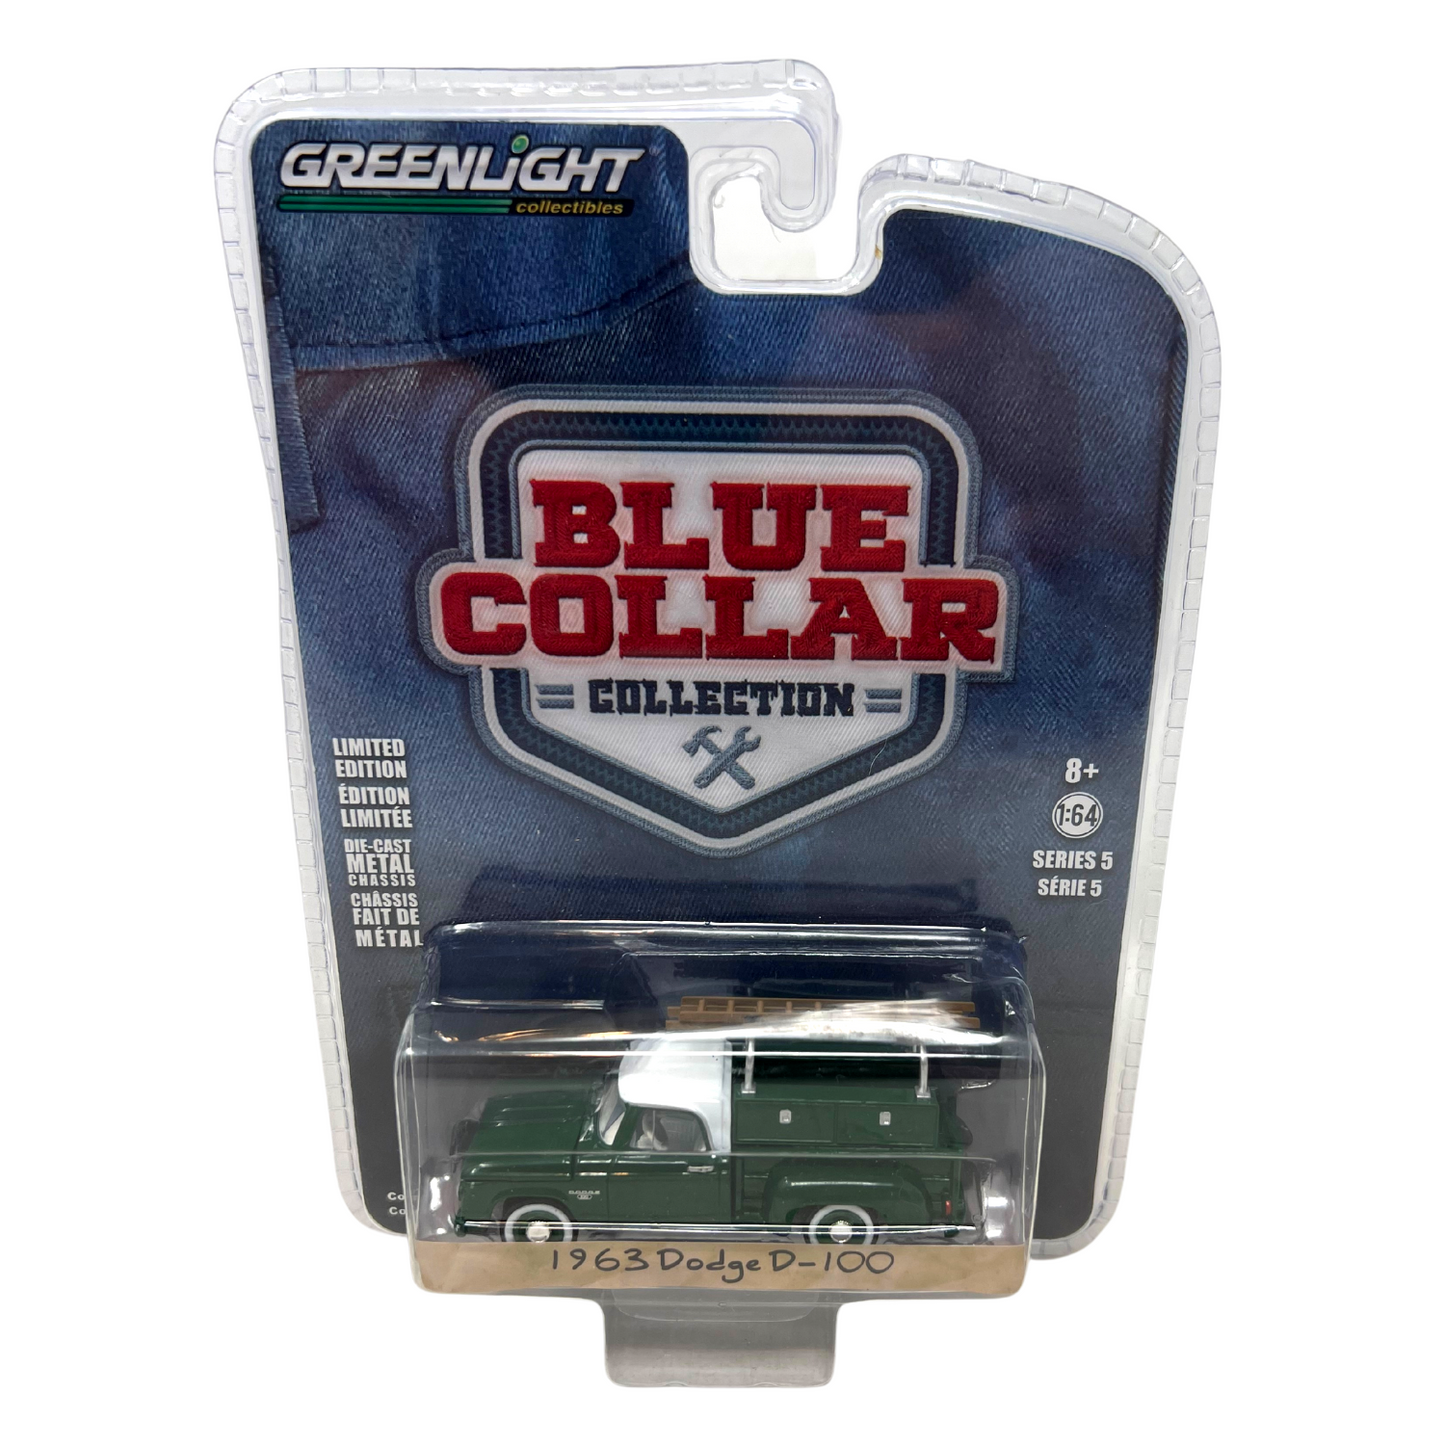 Greenlight Blue Collar Series 5 1963 Dodge D-100 1:64 Diecast